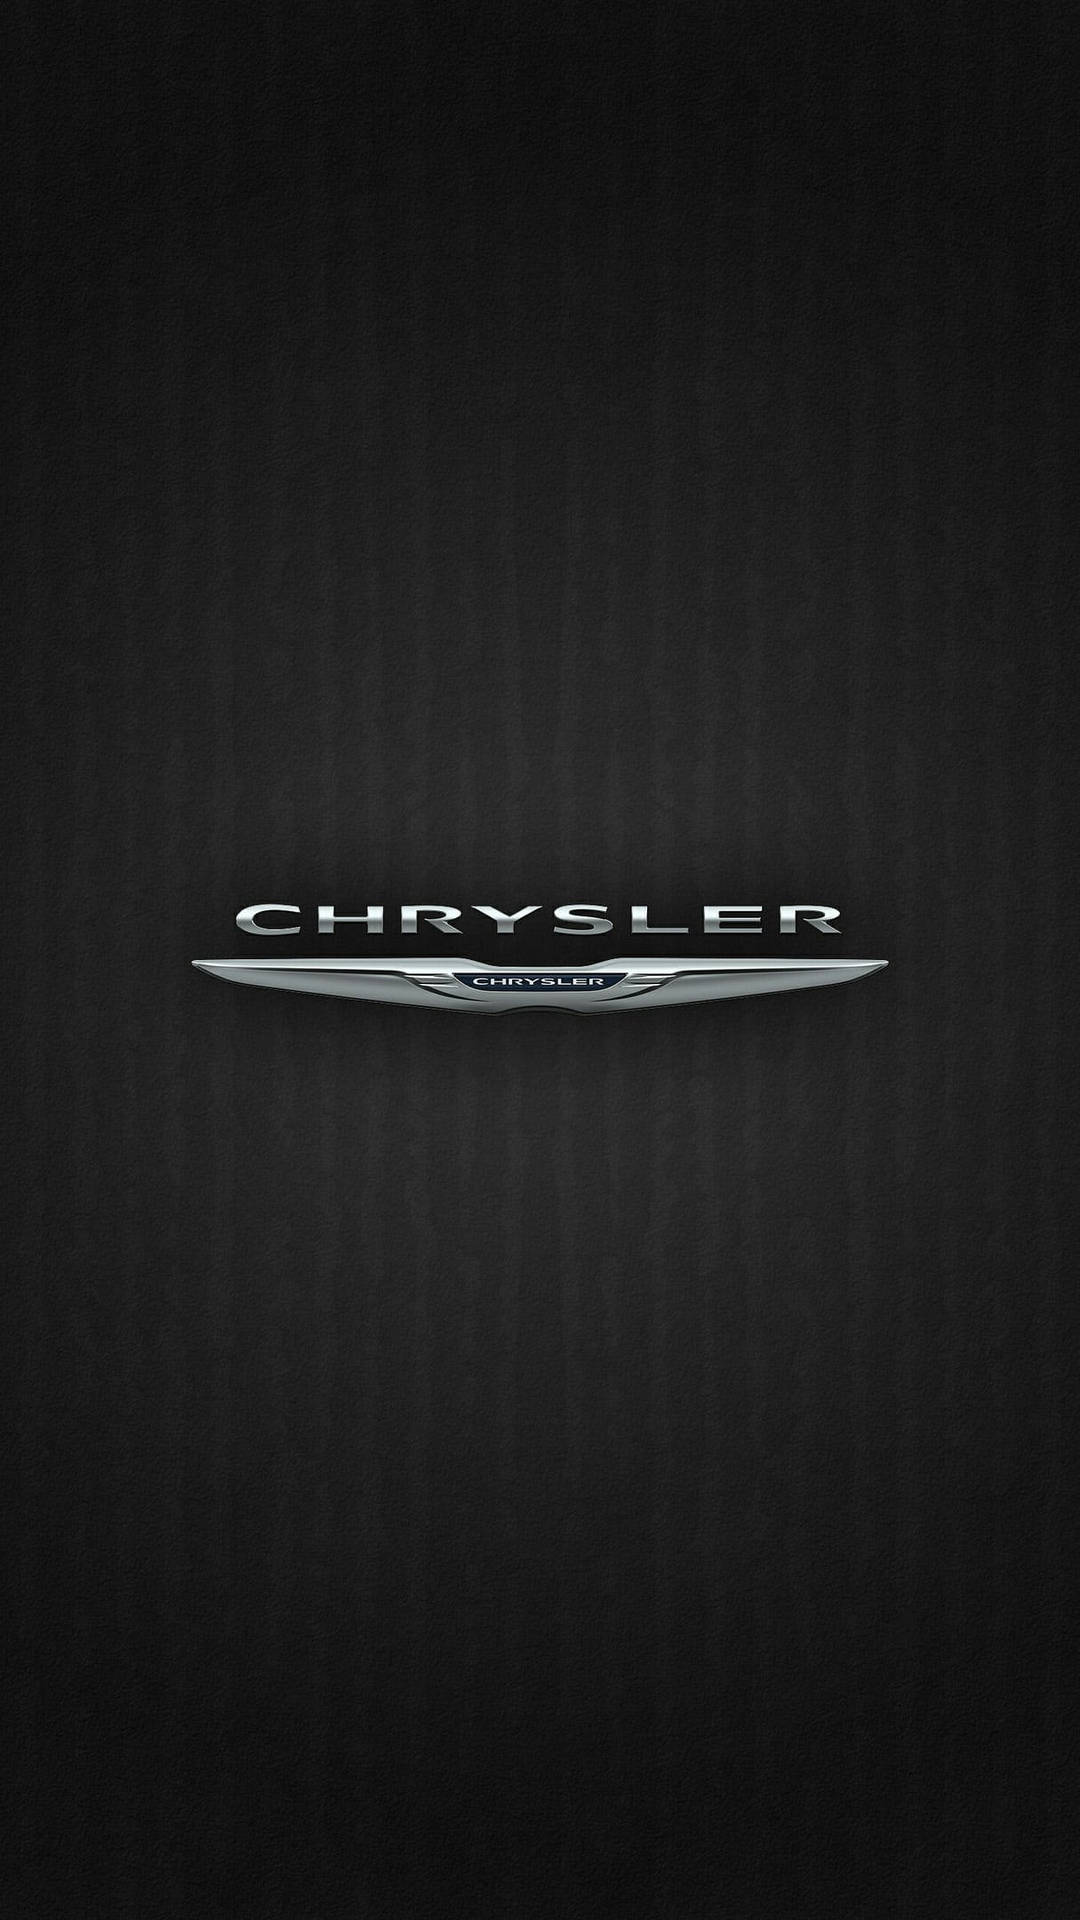 Chrysler Car Logo Background